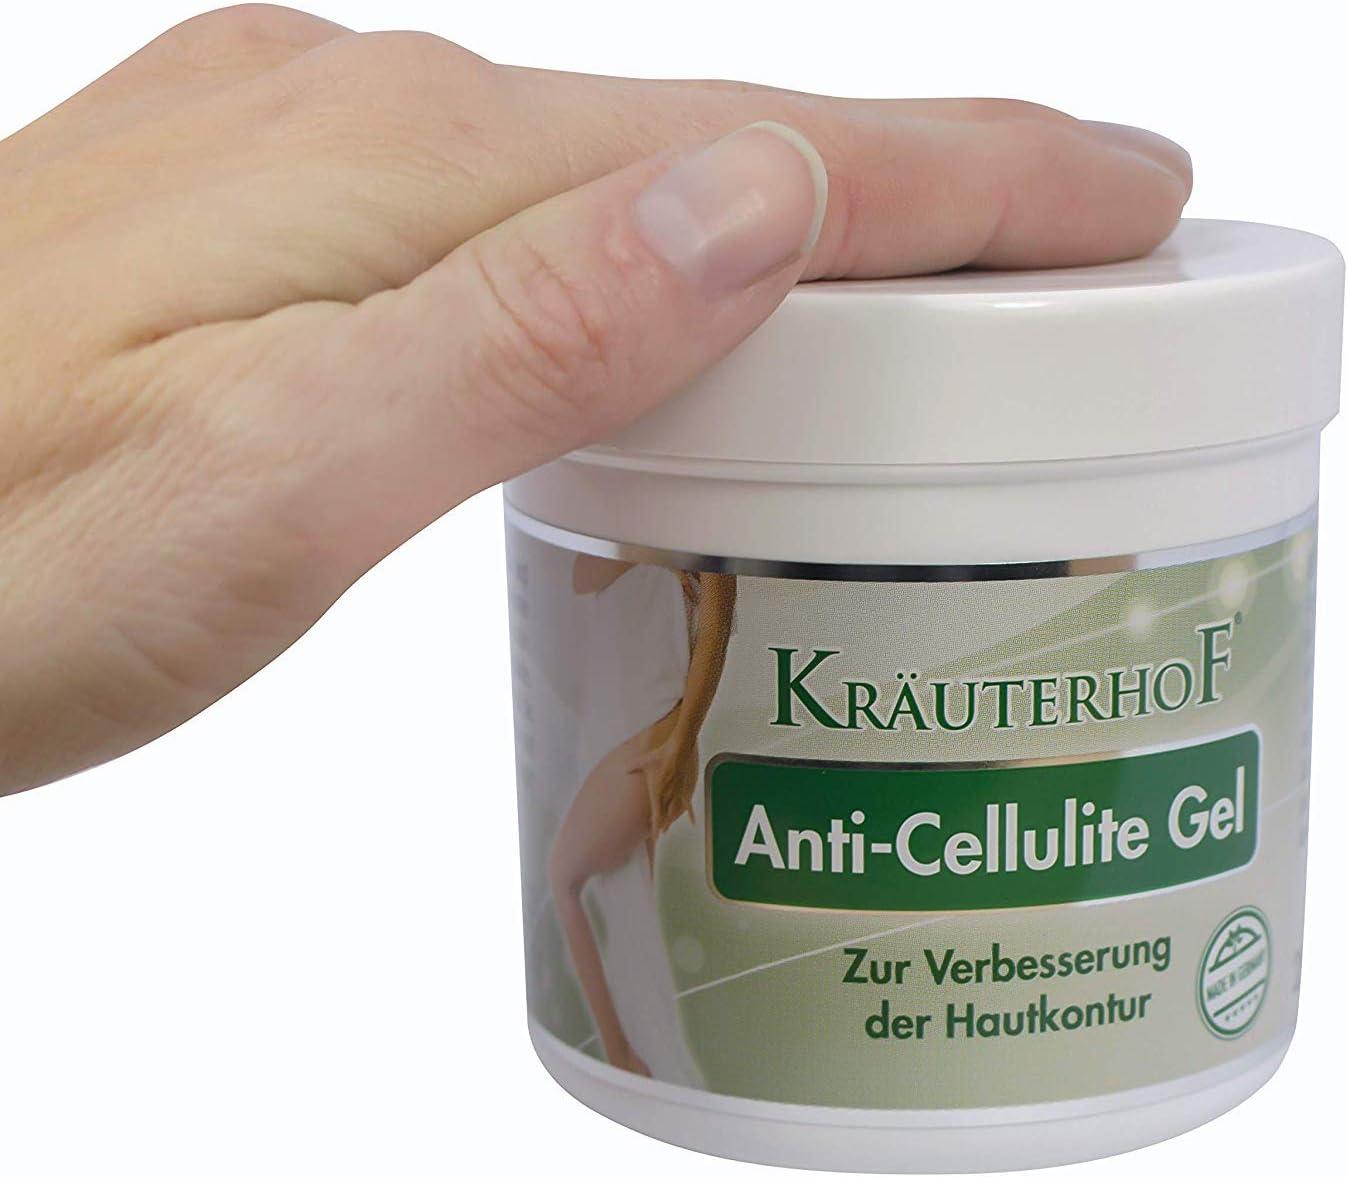 Krauterhof ANTI CELLULITE GEL with Caffeine Carnitine & Rosemary Extract  250 ml.